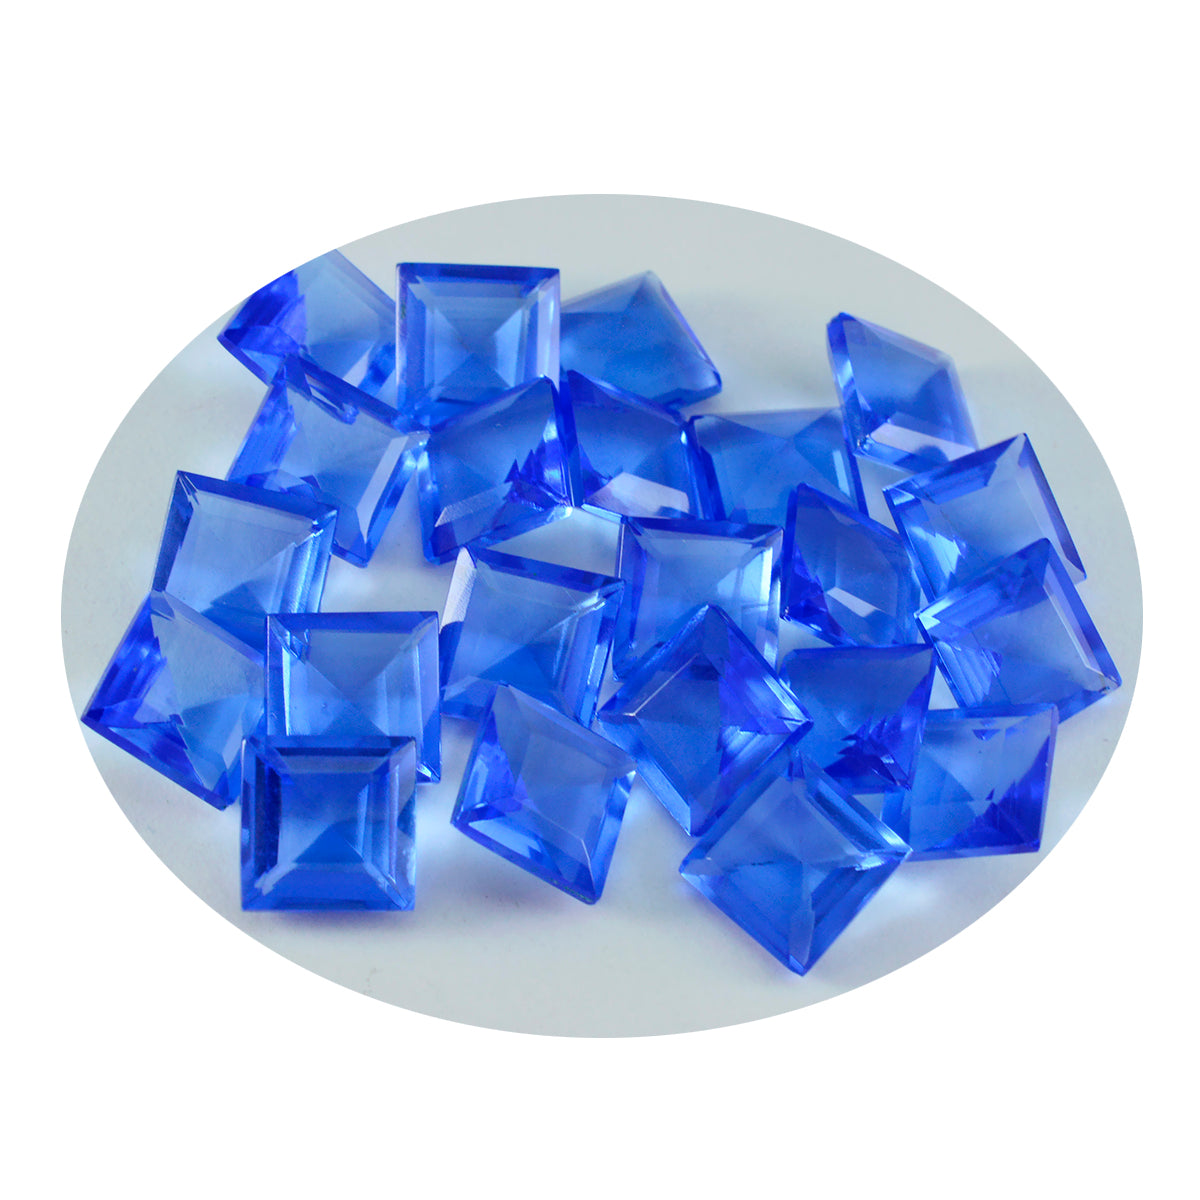 Riyogems 1PC Blue Sapphire CZ Faceted 10x10 mm Square Shape handsome Quality Loose Gem